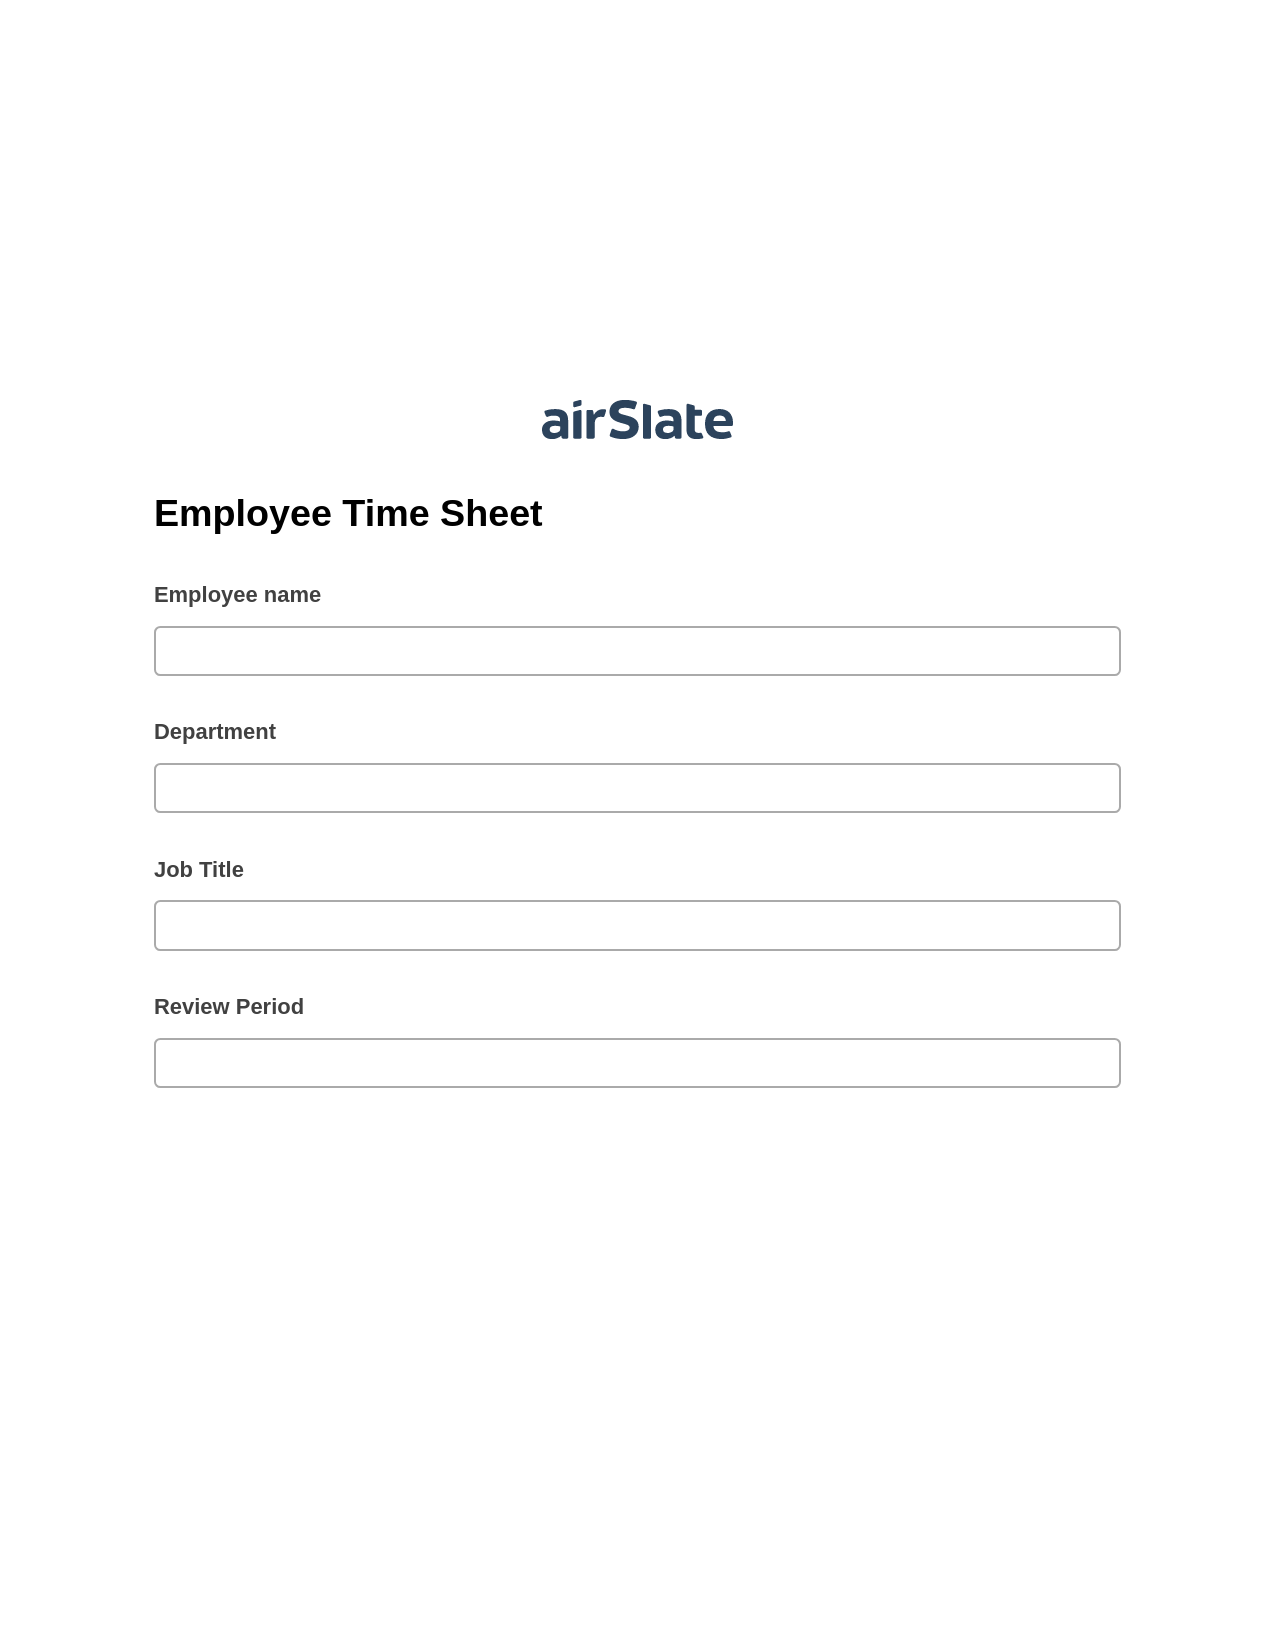 Employee Time Sheet Pre-fill Document Bot, Slack Notification Bot, Archive to Dropbox Bot